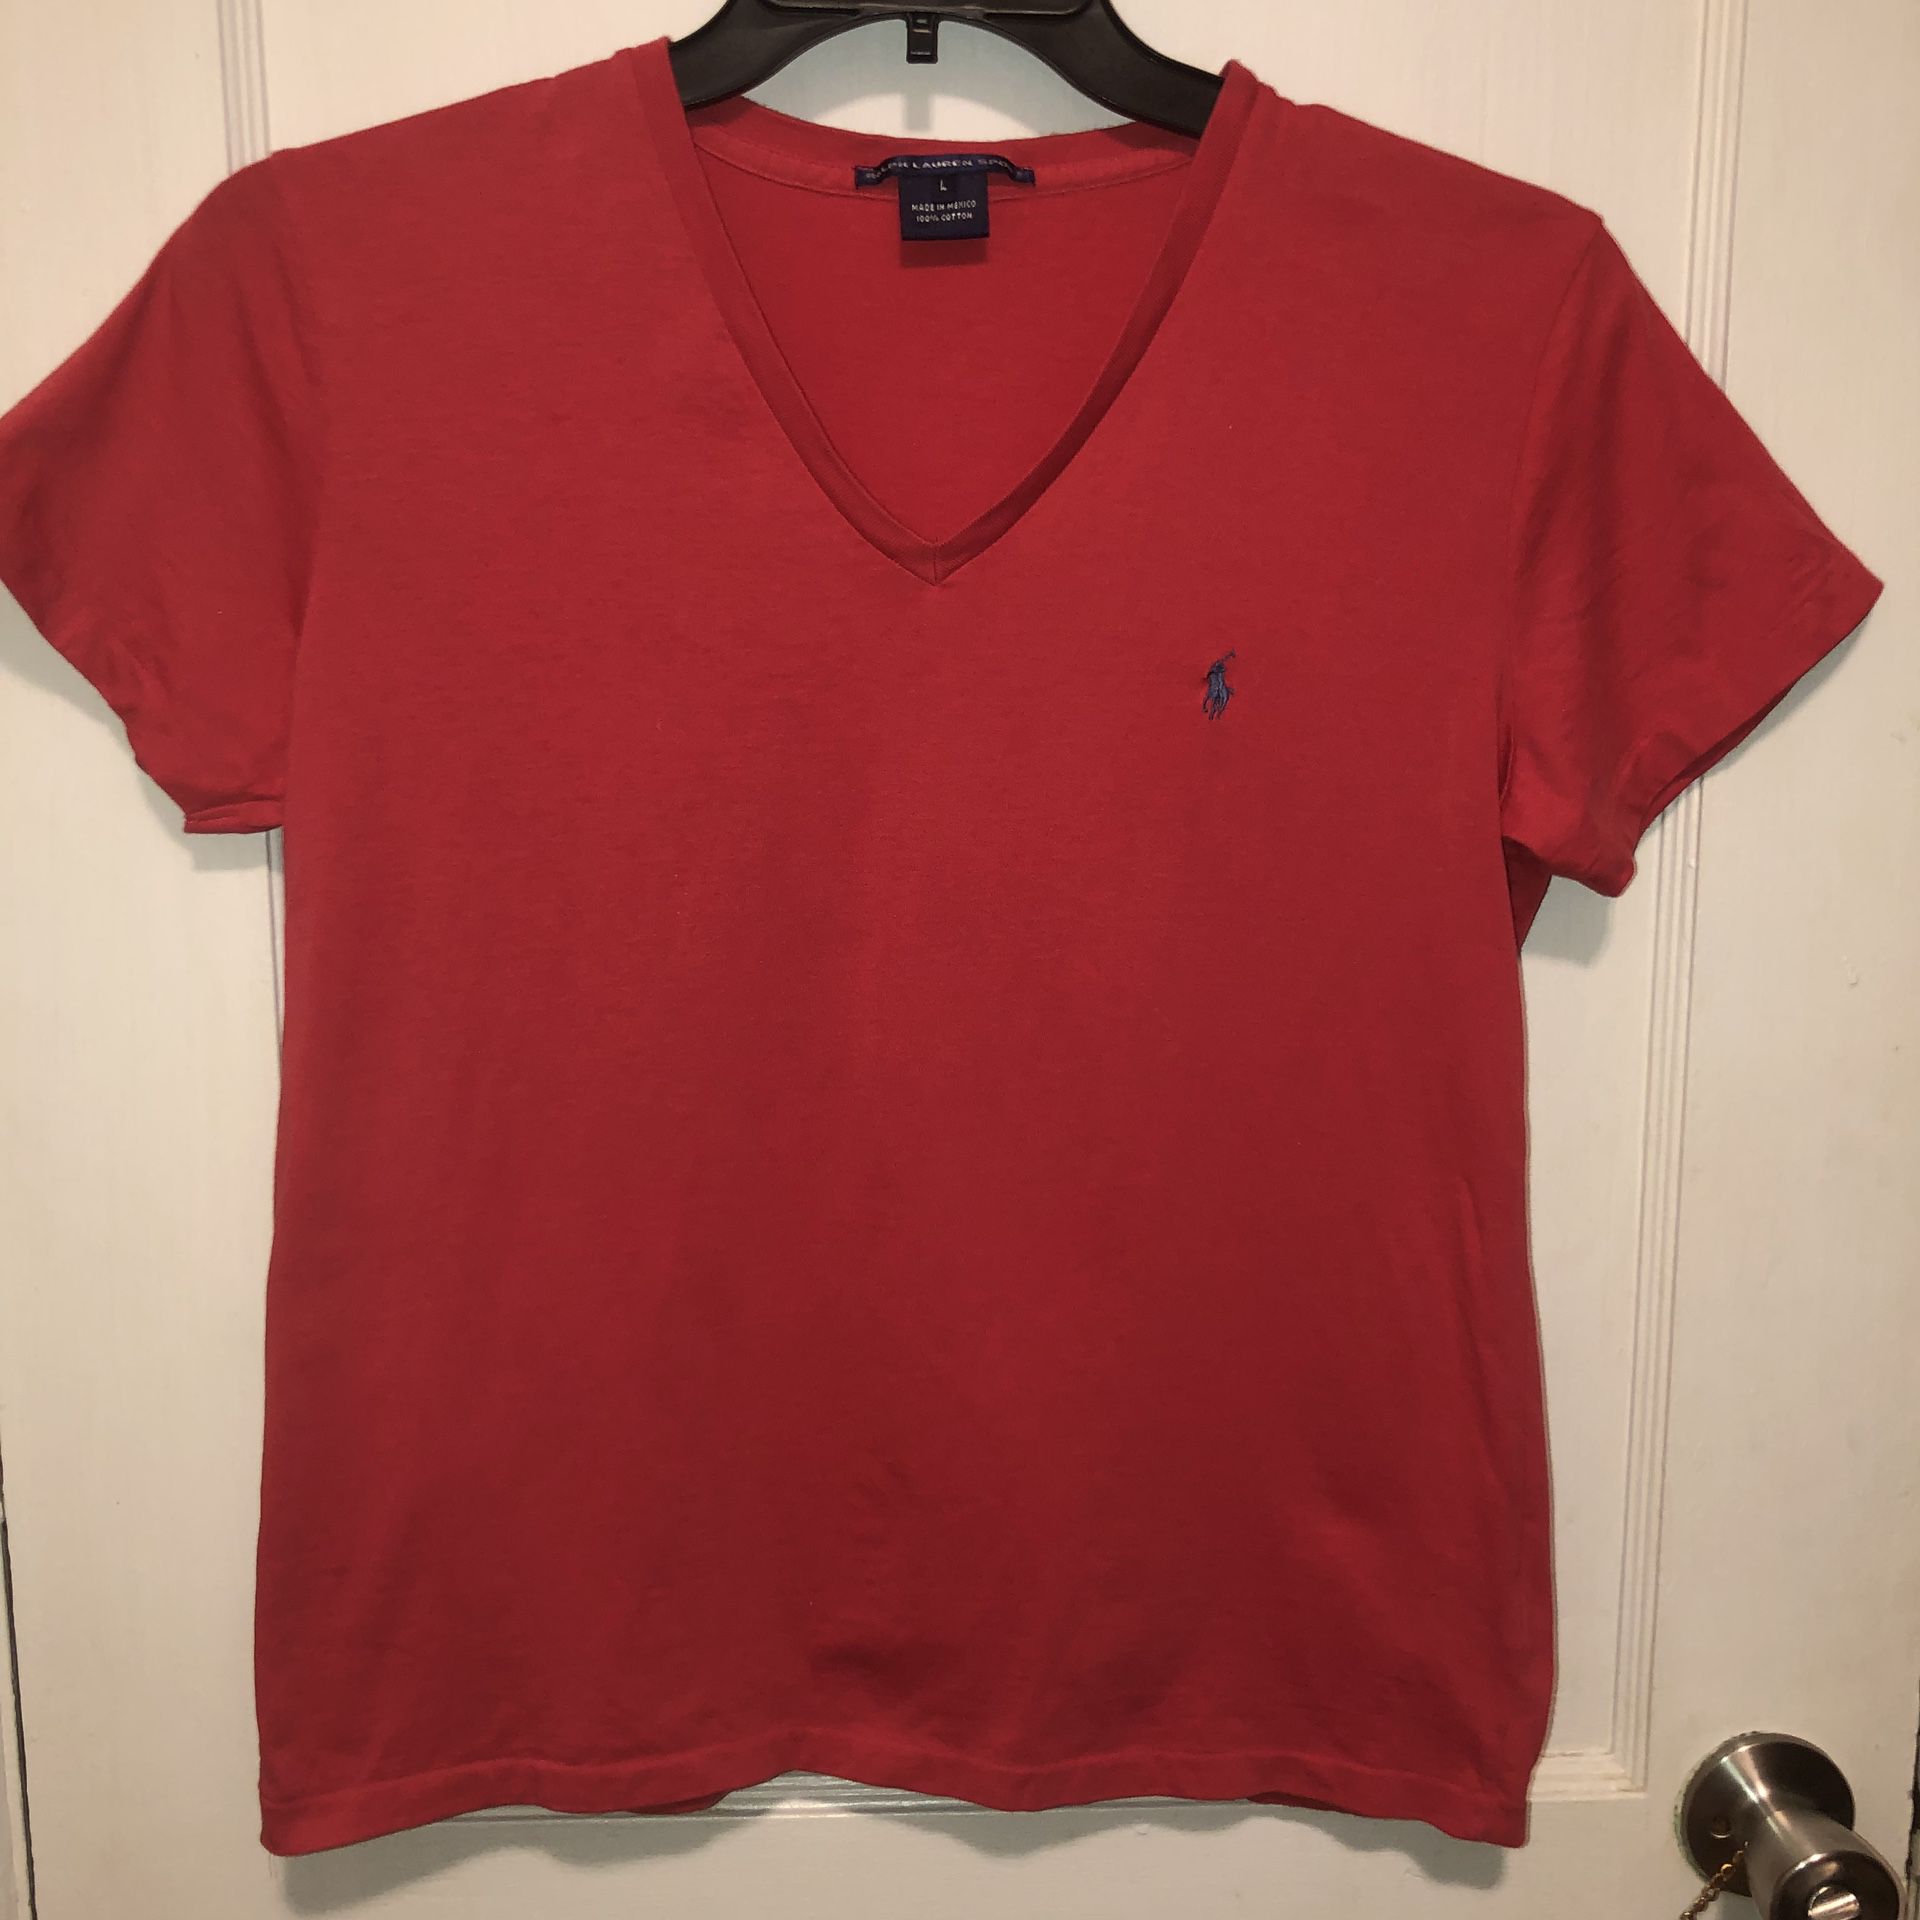 Women’s Ralph Lauren Sport size large red and navy v-neck shirt